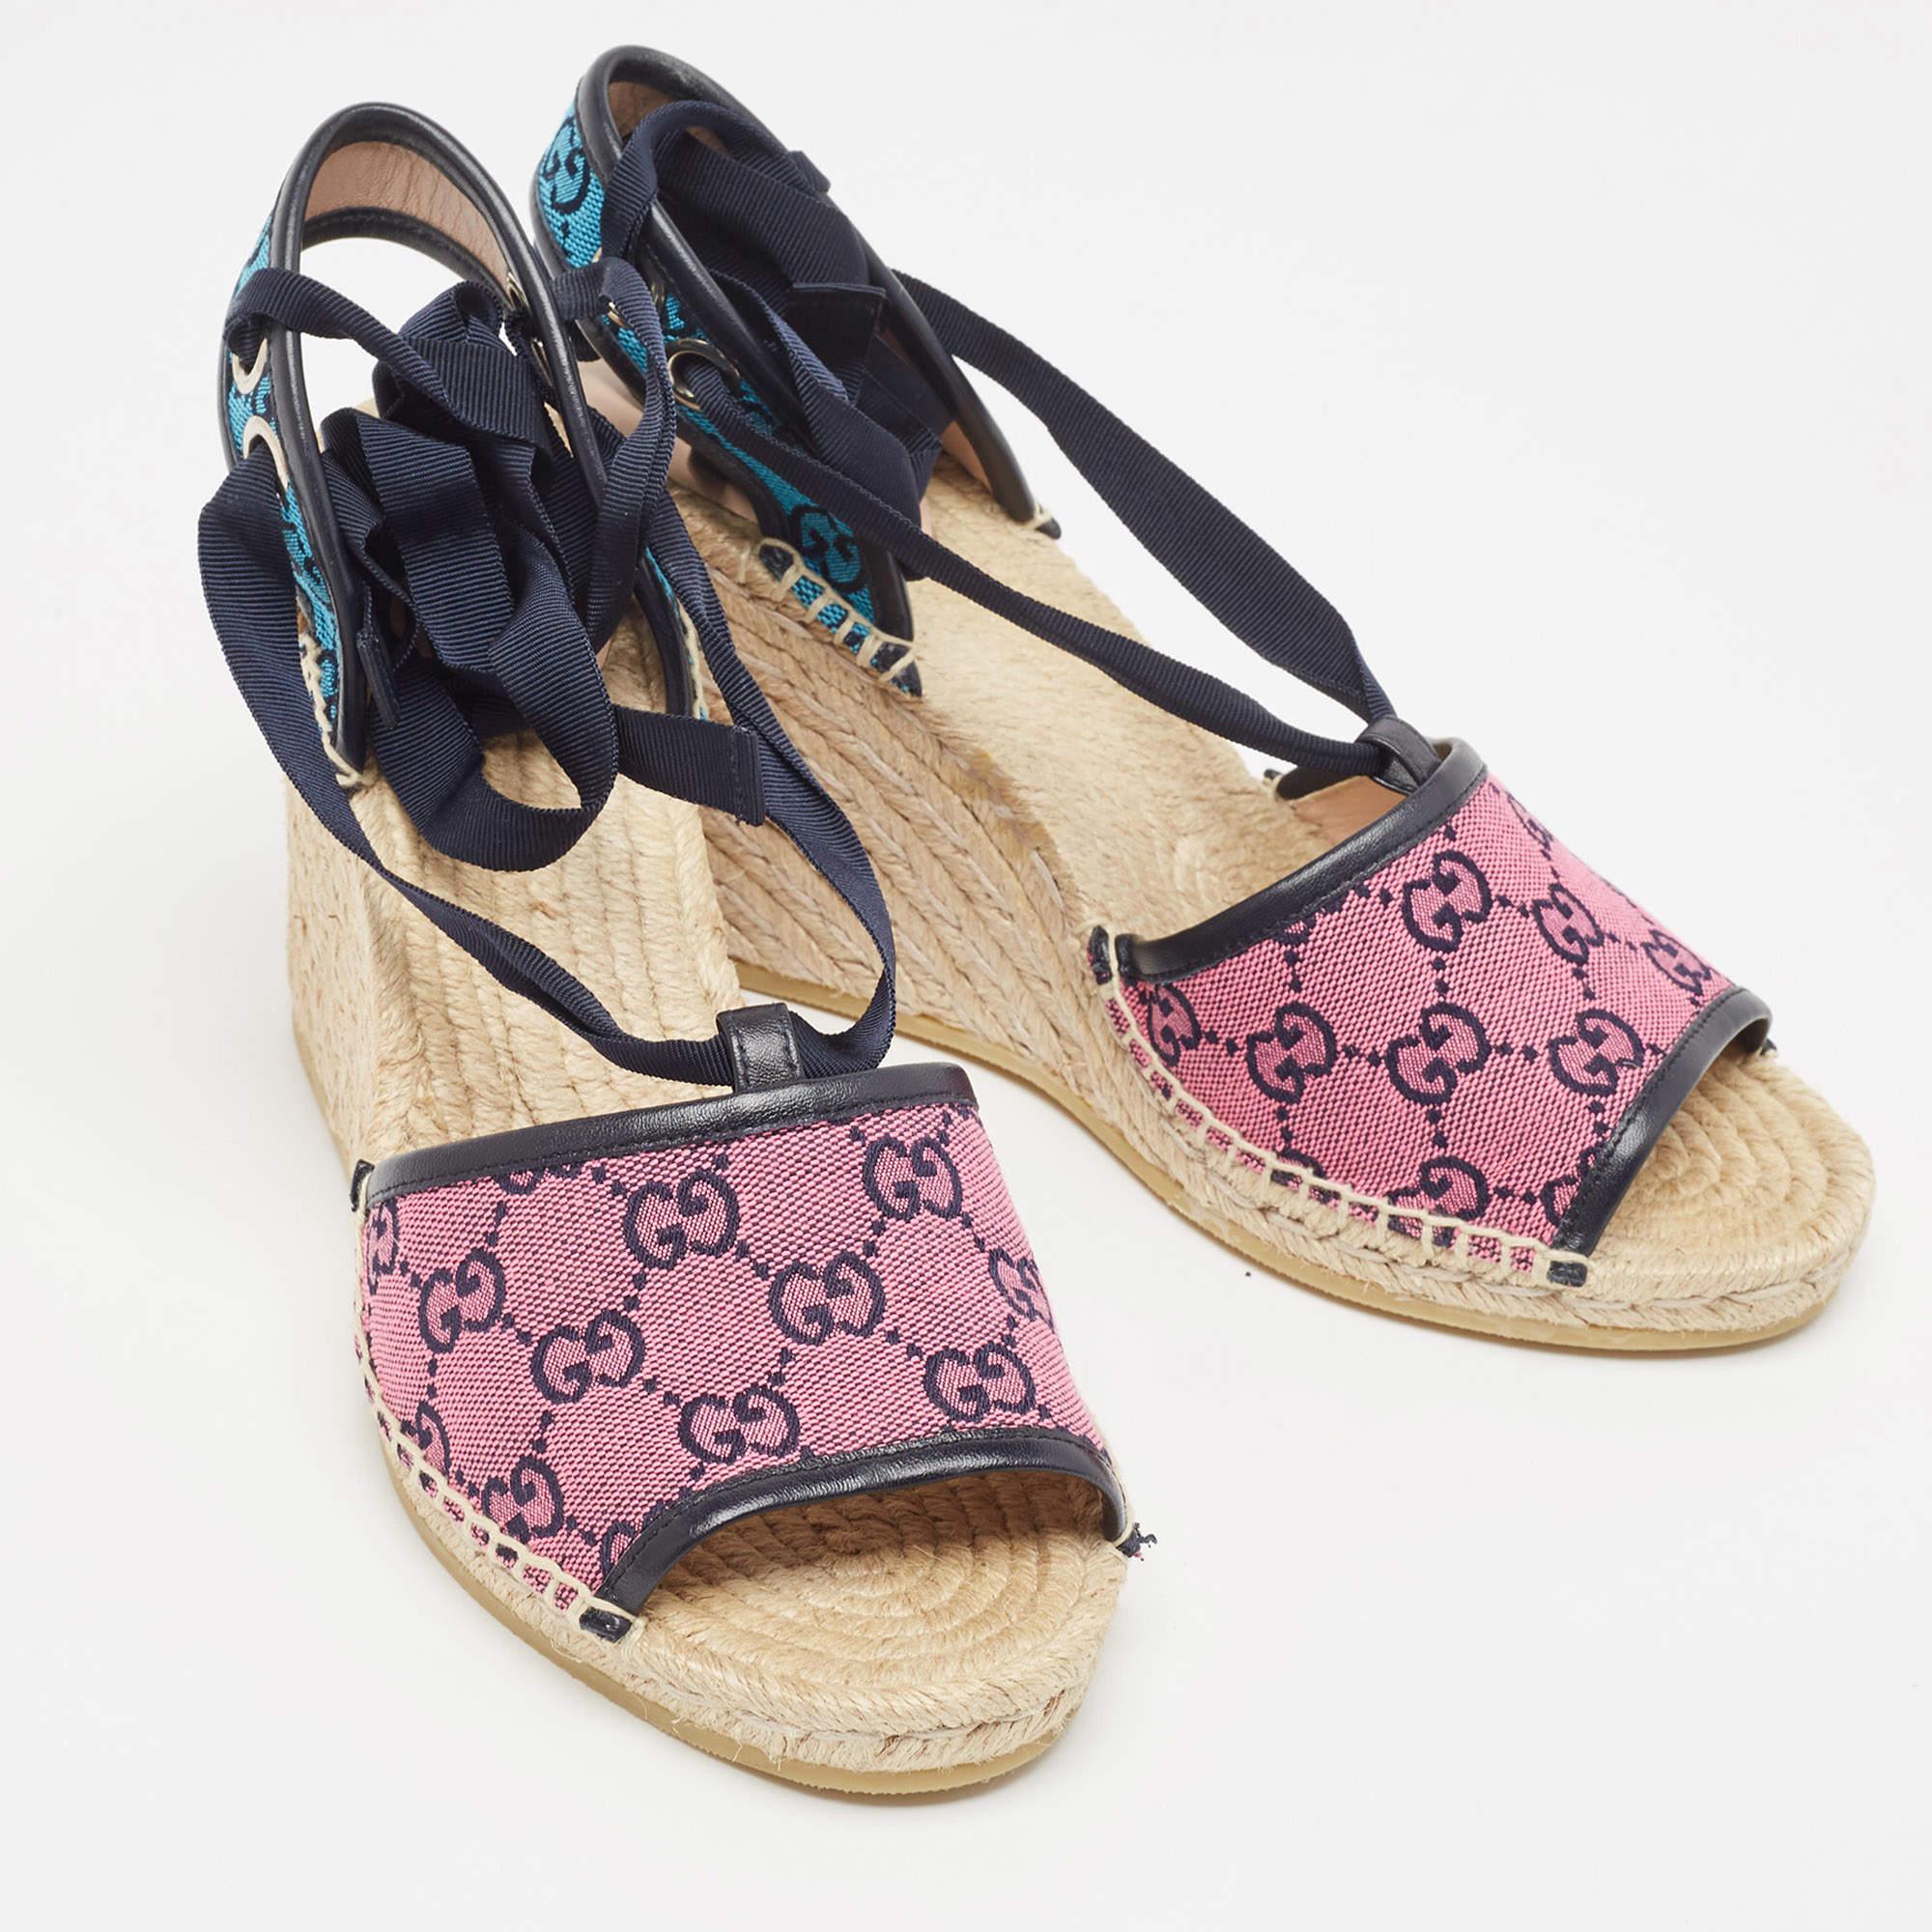 Gucci Multicolor Canvas and Leather Wedge Sandals Size 41 In Good Condition For Sale In Dubai, Al Qouz 2